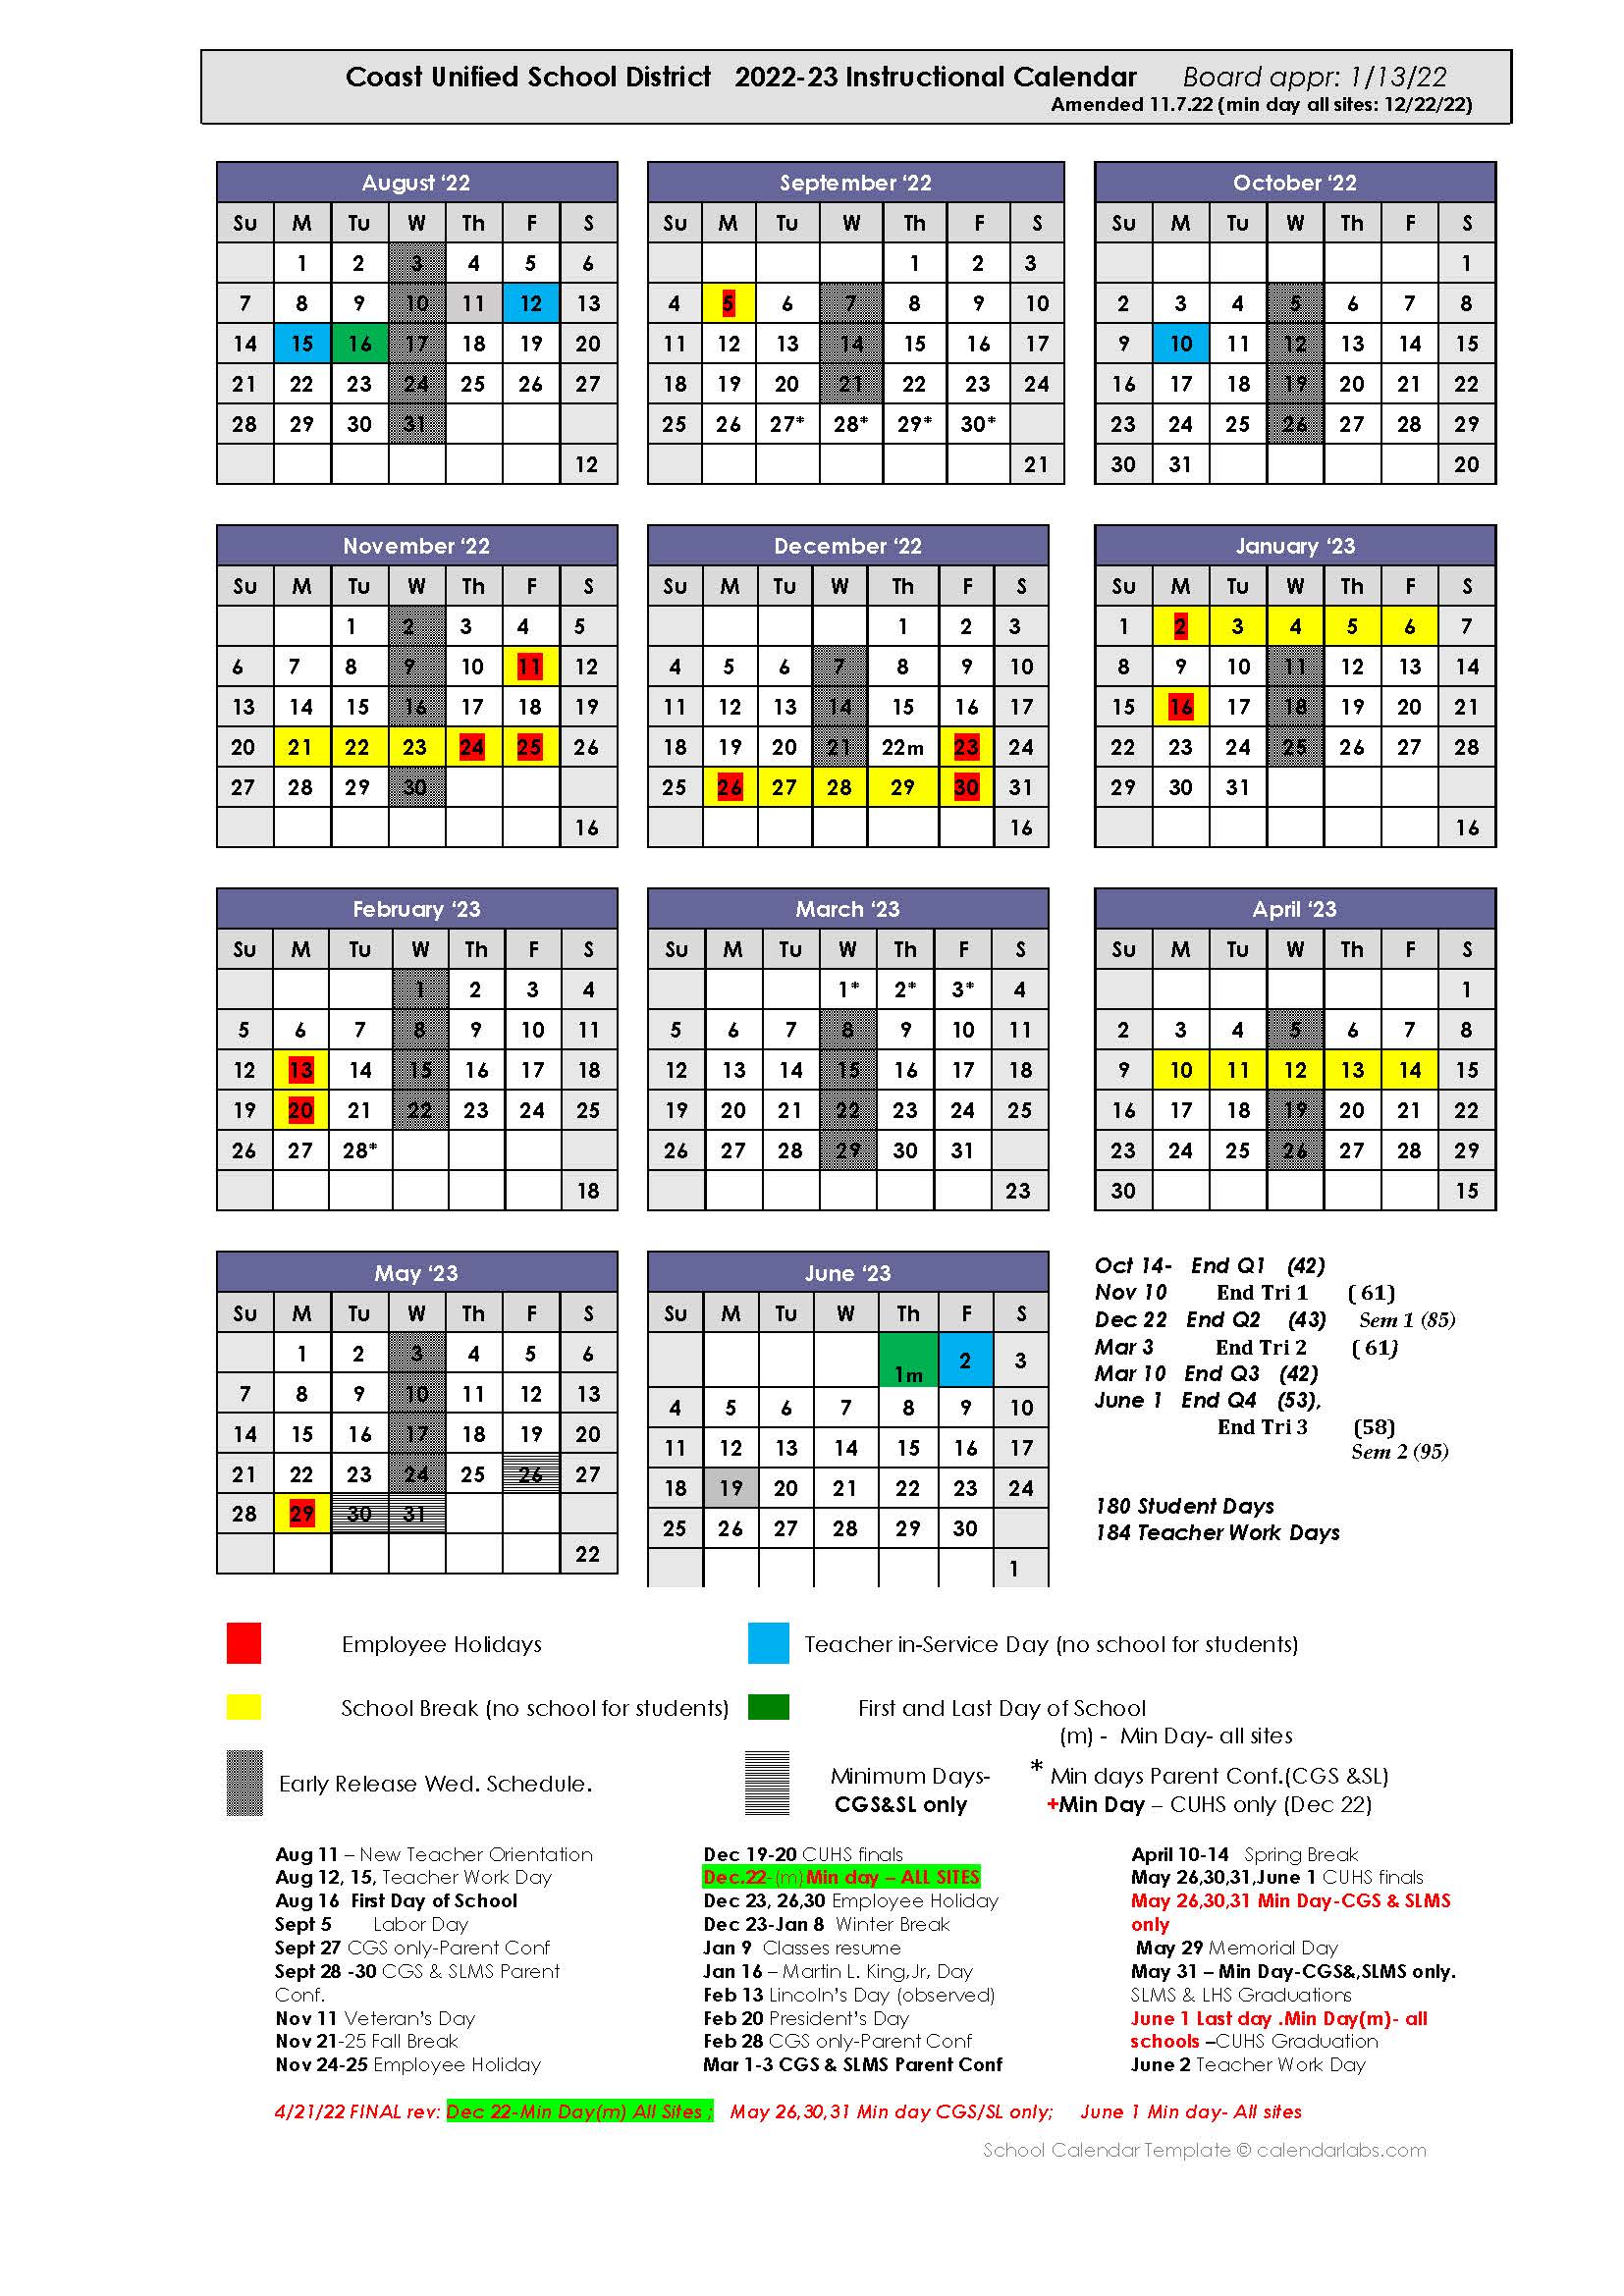 Coast Unified School District Calendar 2024-2025